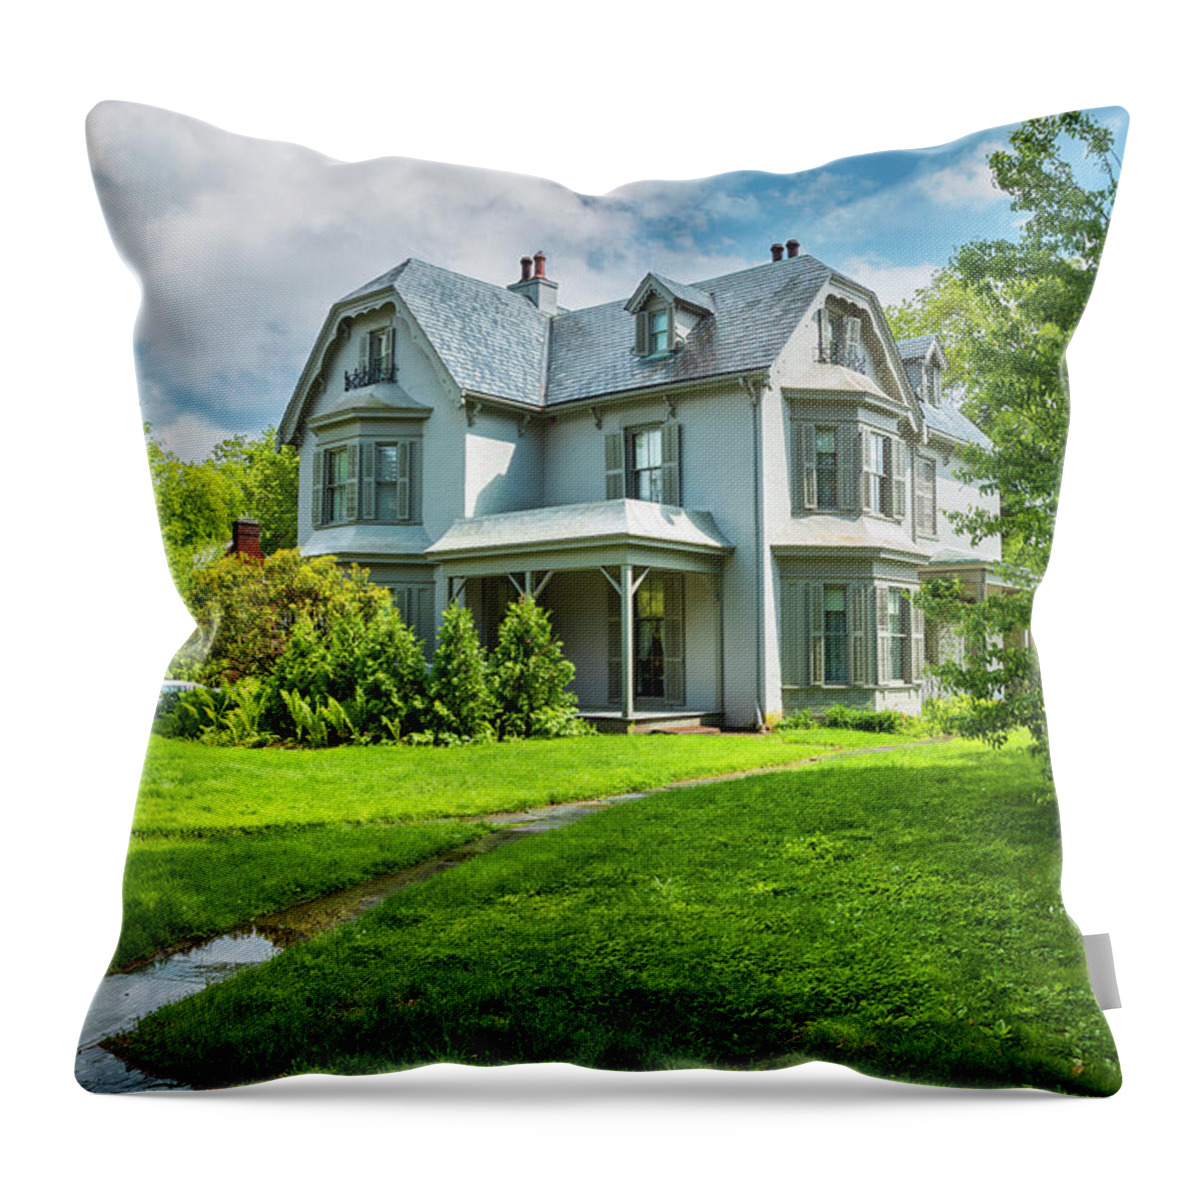 Estock Throw Pillow featuring the digital art Harriet Beecher Stowe House by Claudia Uripos